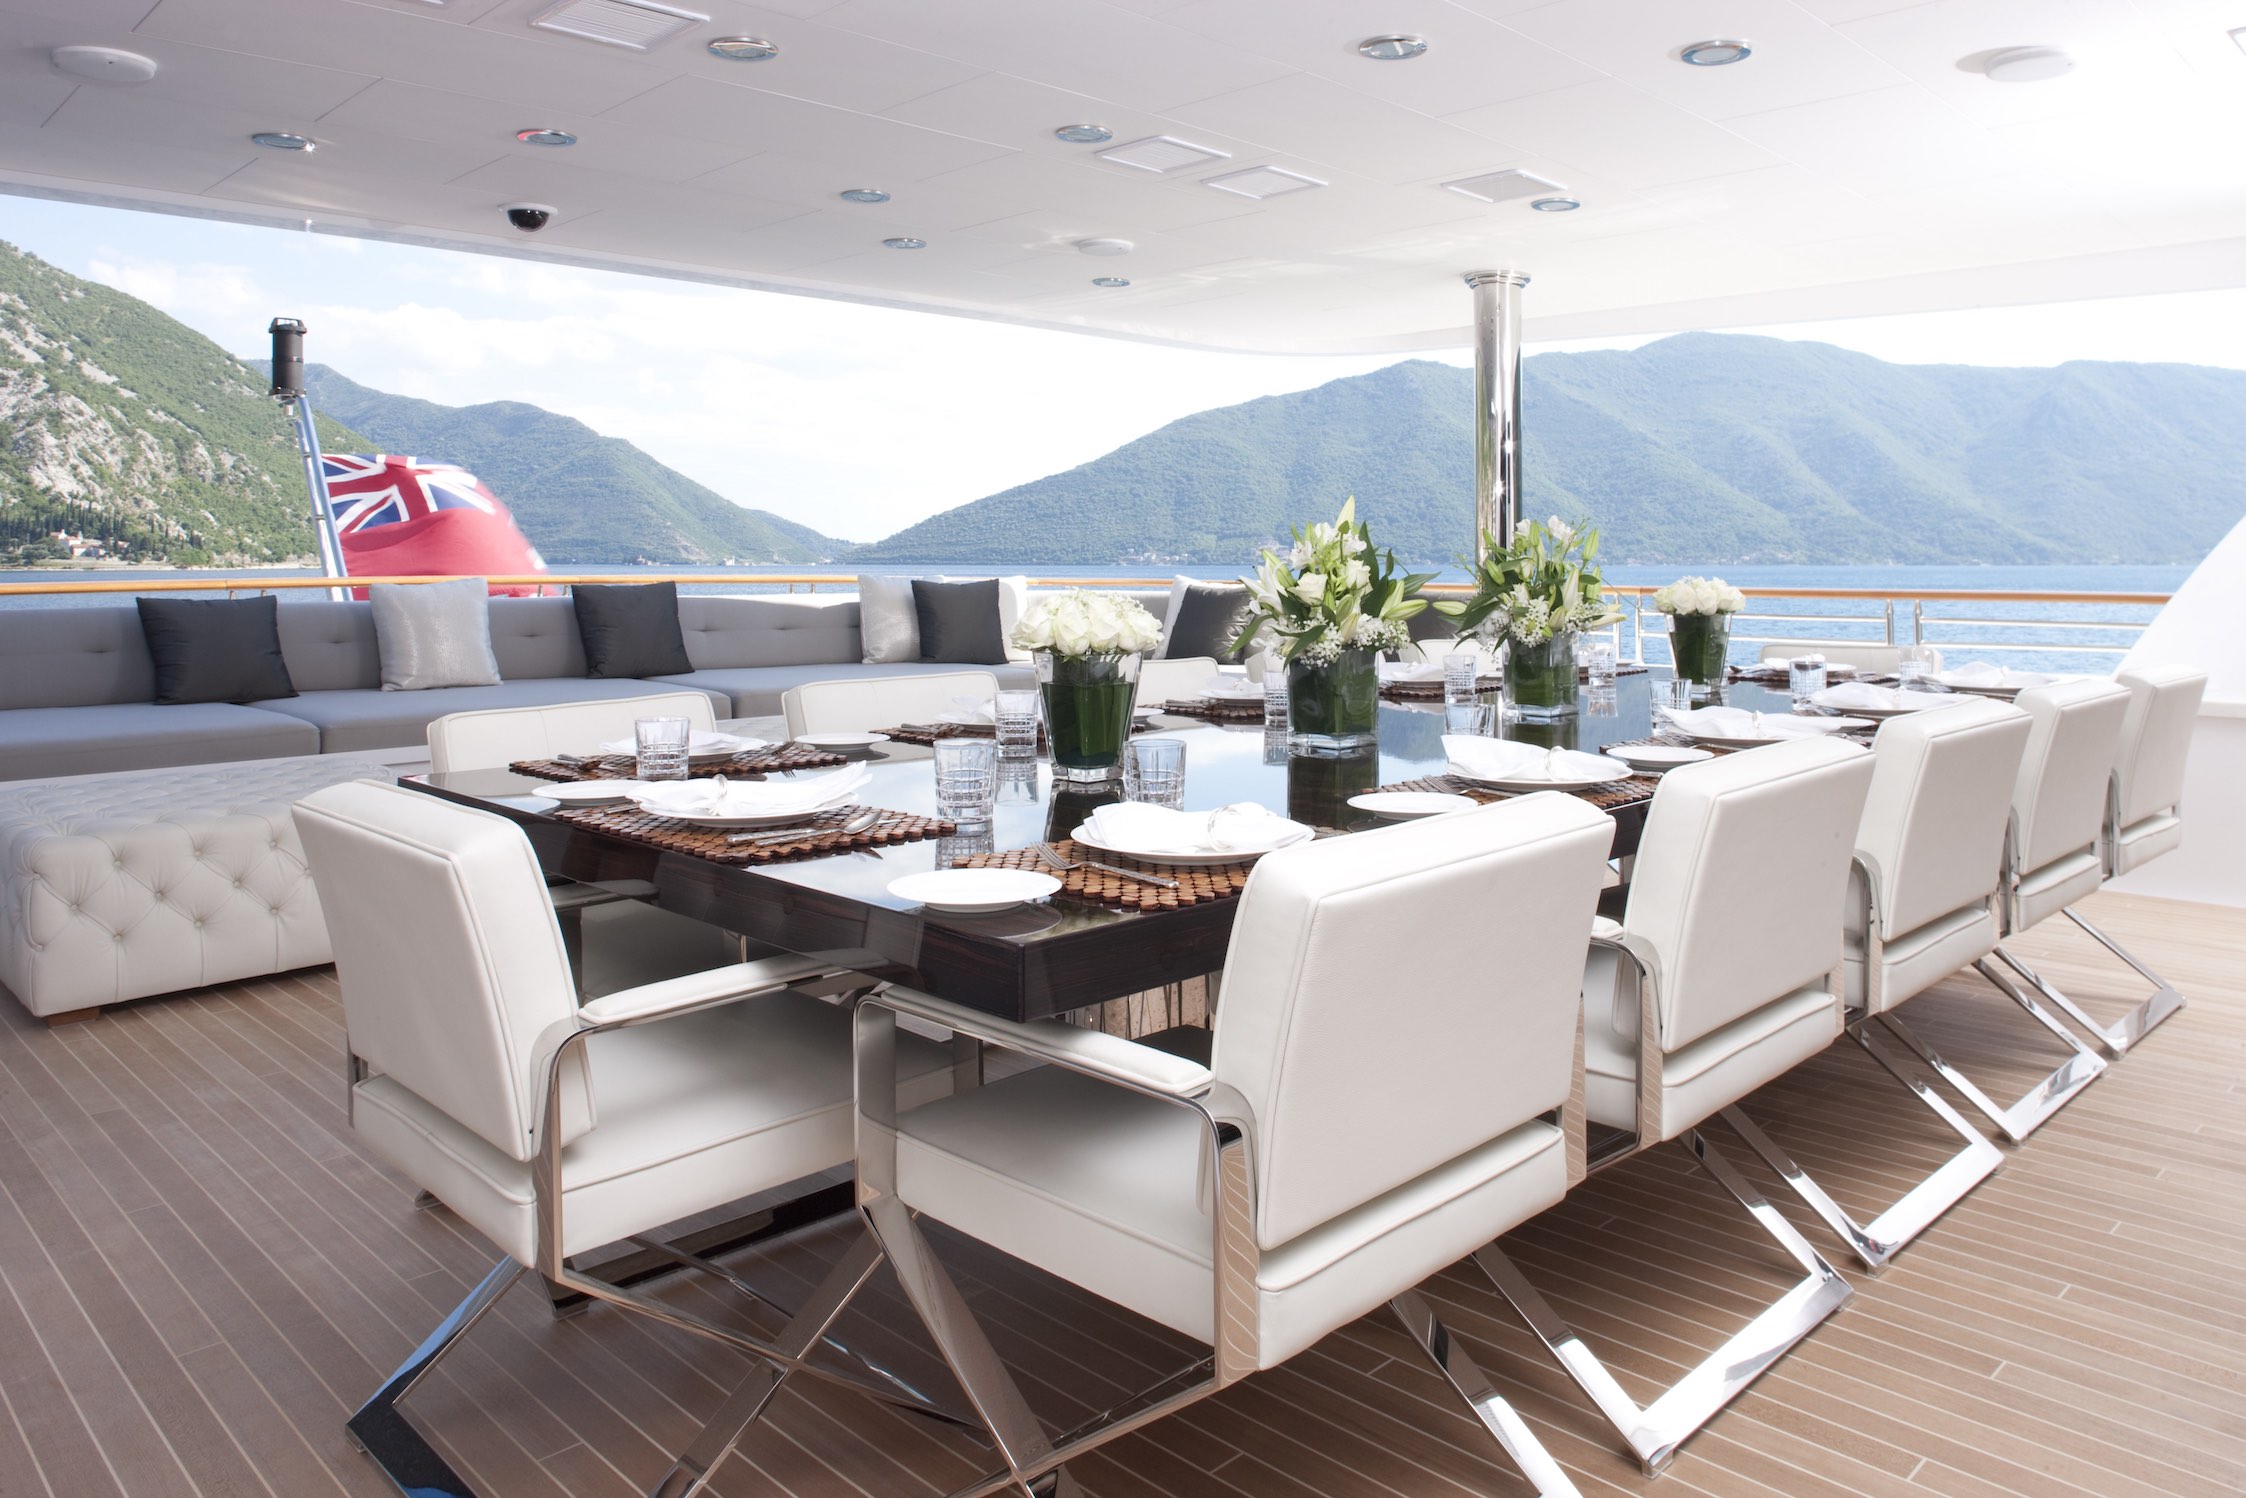 Carpe Diem Luxury Yacht exterior dining